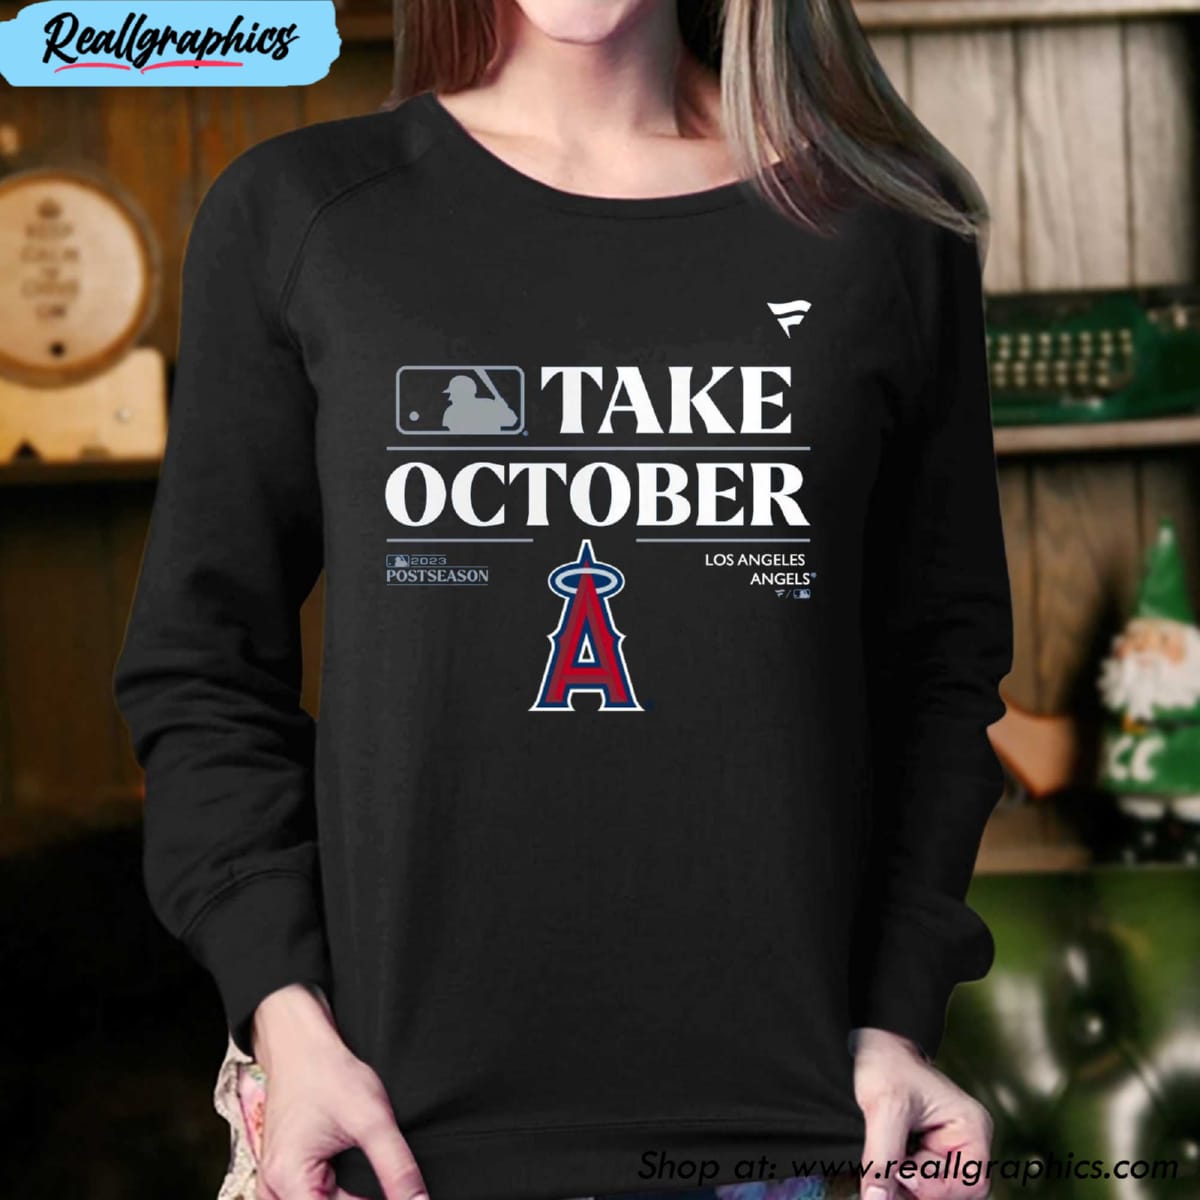 Los Angeles Angels Take October Playoffs Postseason 2023 Unisex T-shirt,  Hoodie, Sweatshirt - Reallgraphics